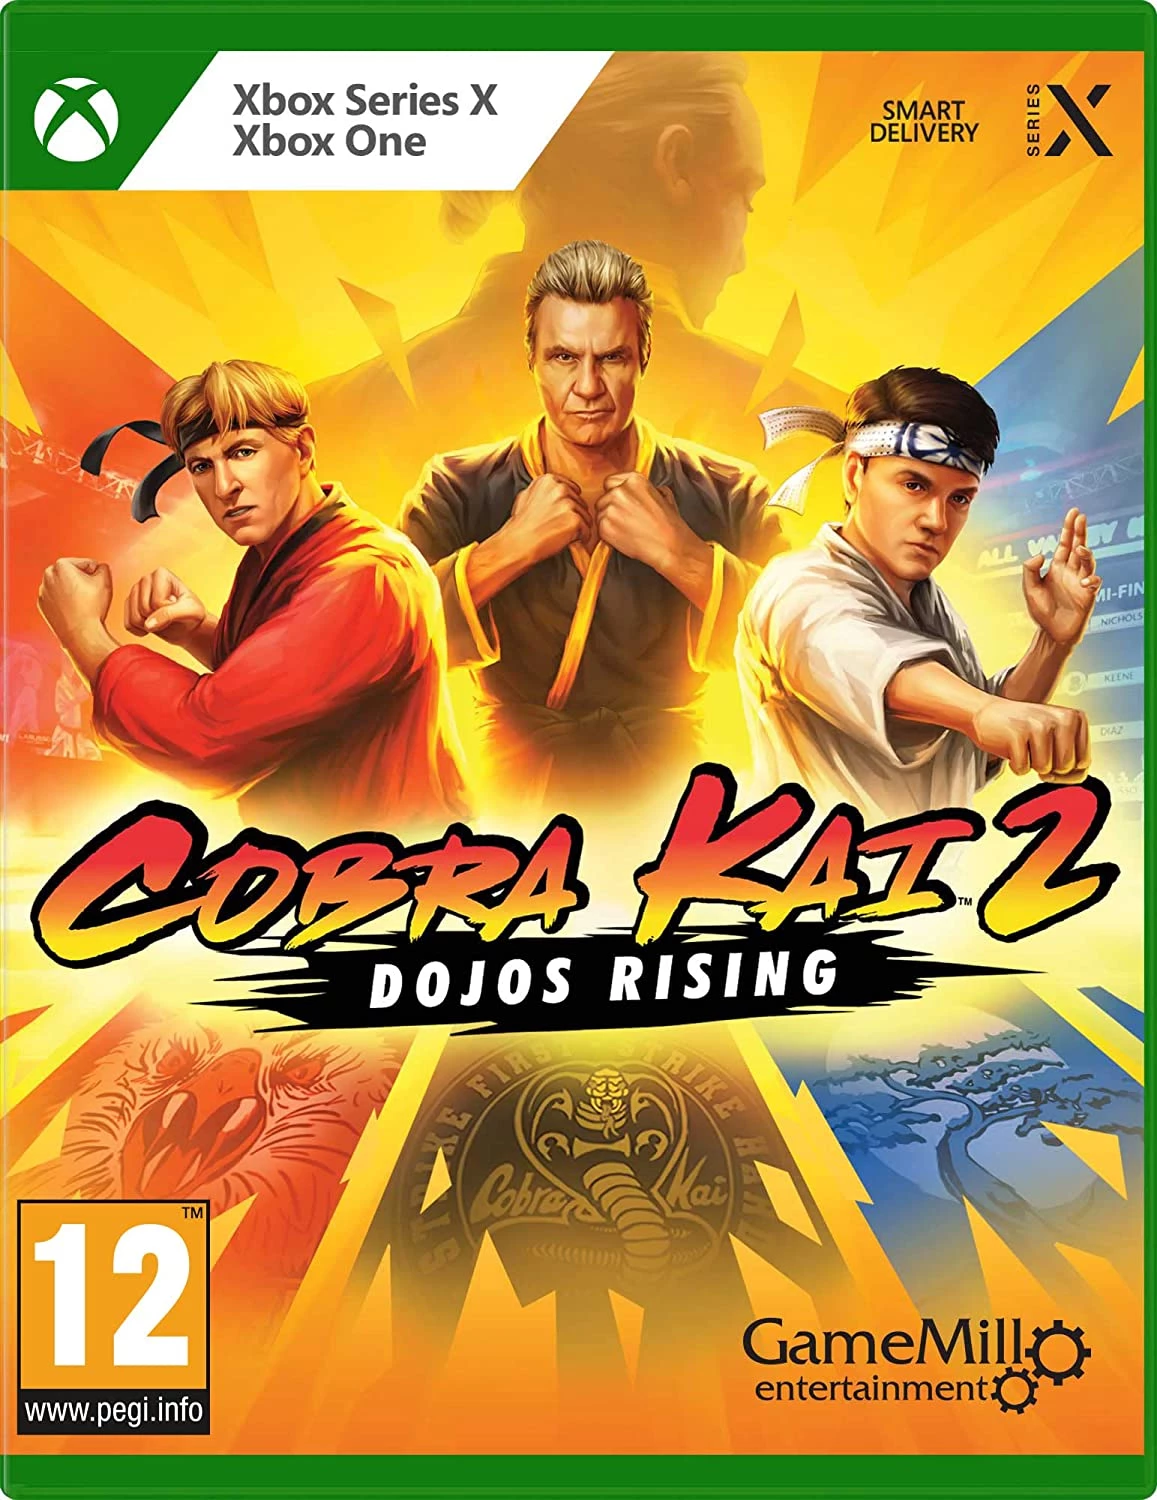 Cobra Kai 2: Dojos Rising (Xbox One), GameMill Entertainment